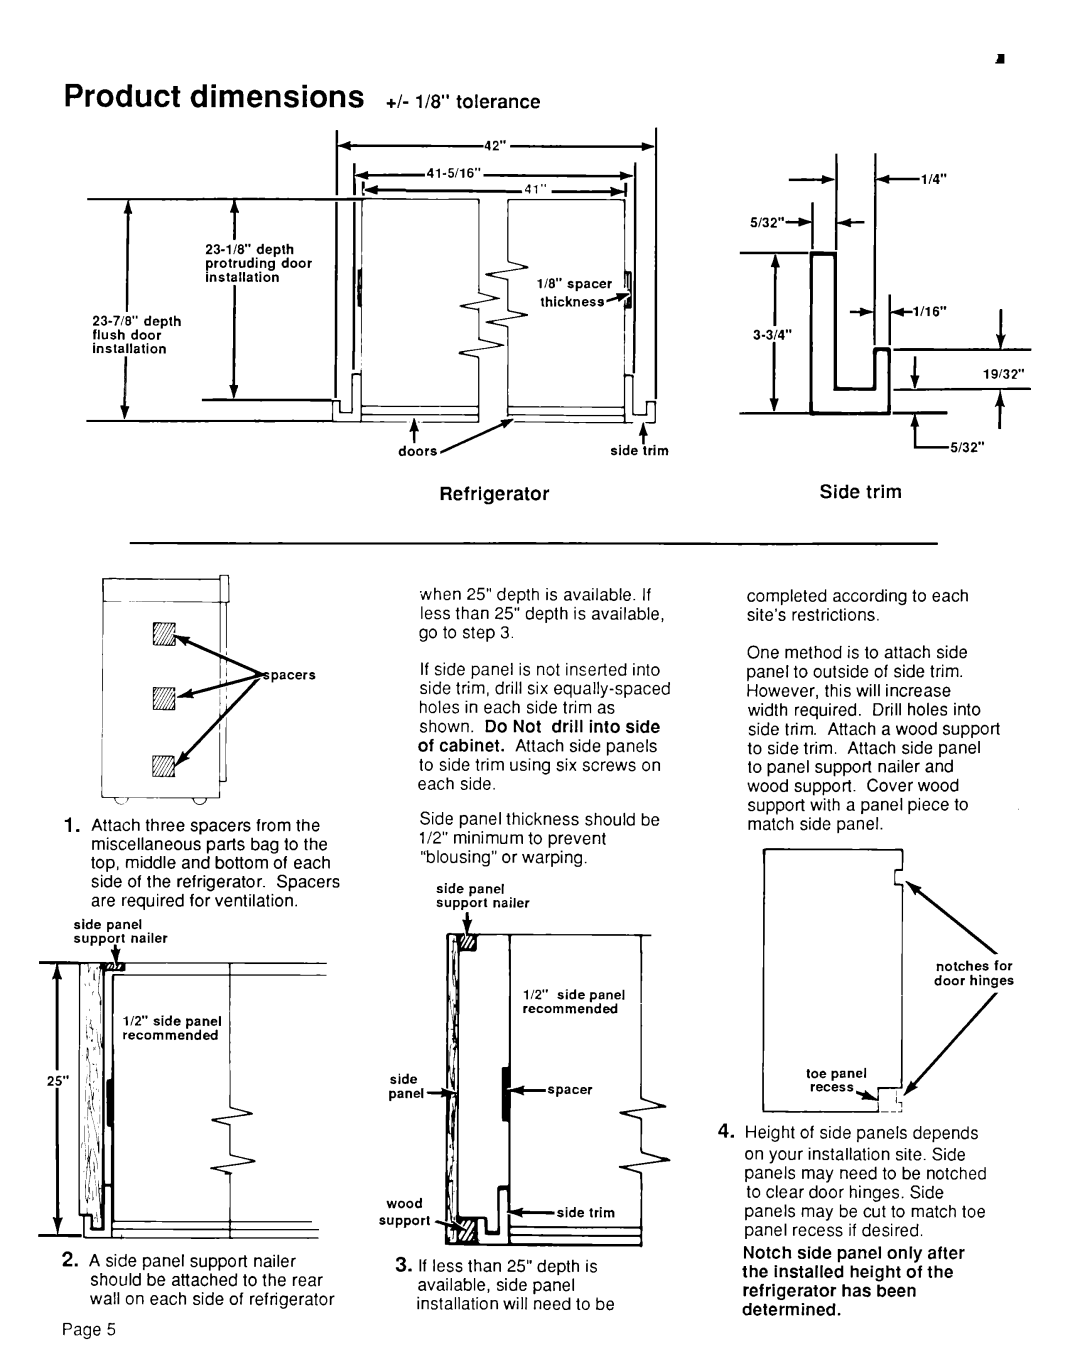 KitchenAid KSRF42DT installation instructions Product dimensions +I- WY tolerance, b-42”, Refrigerator, Side trim 